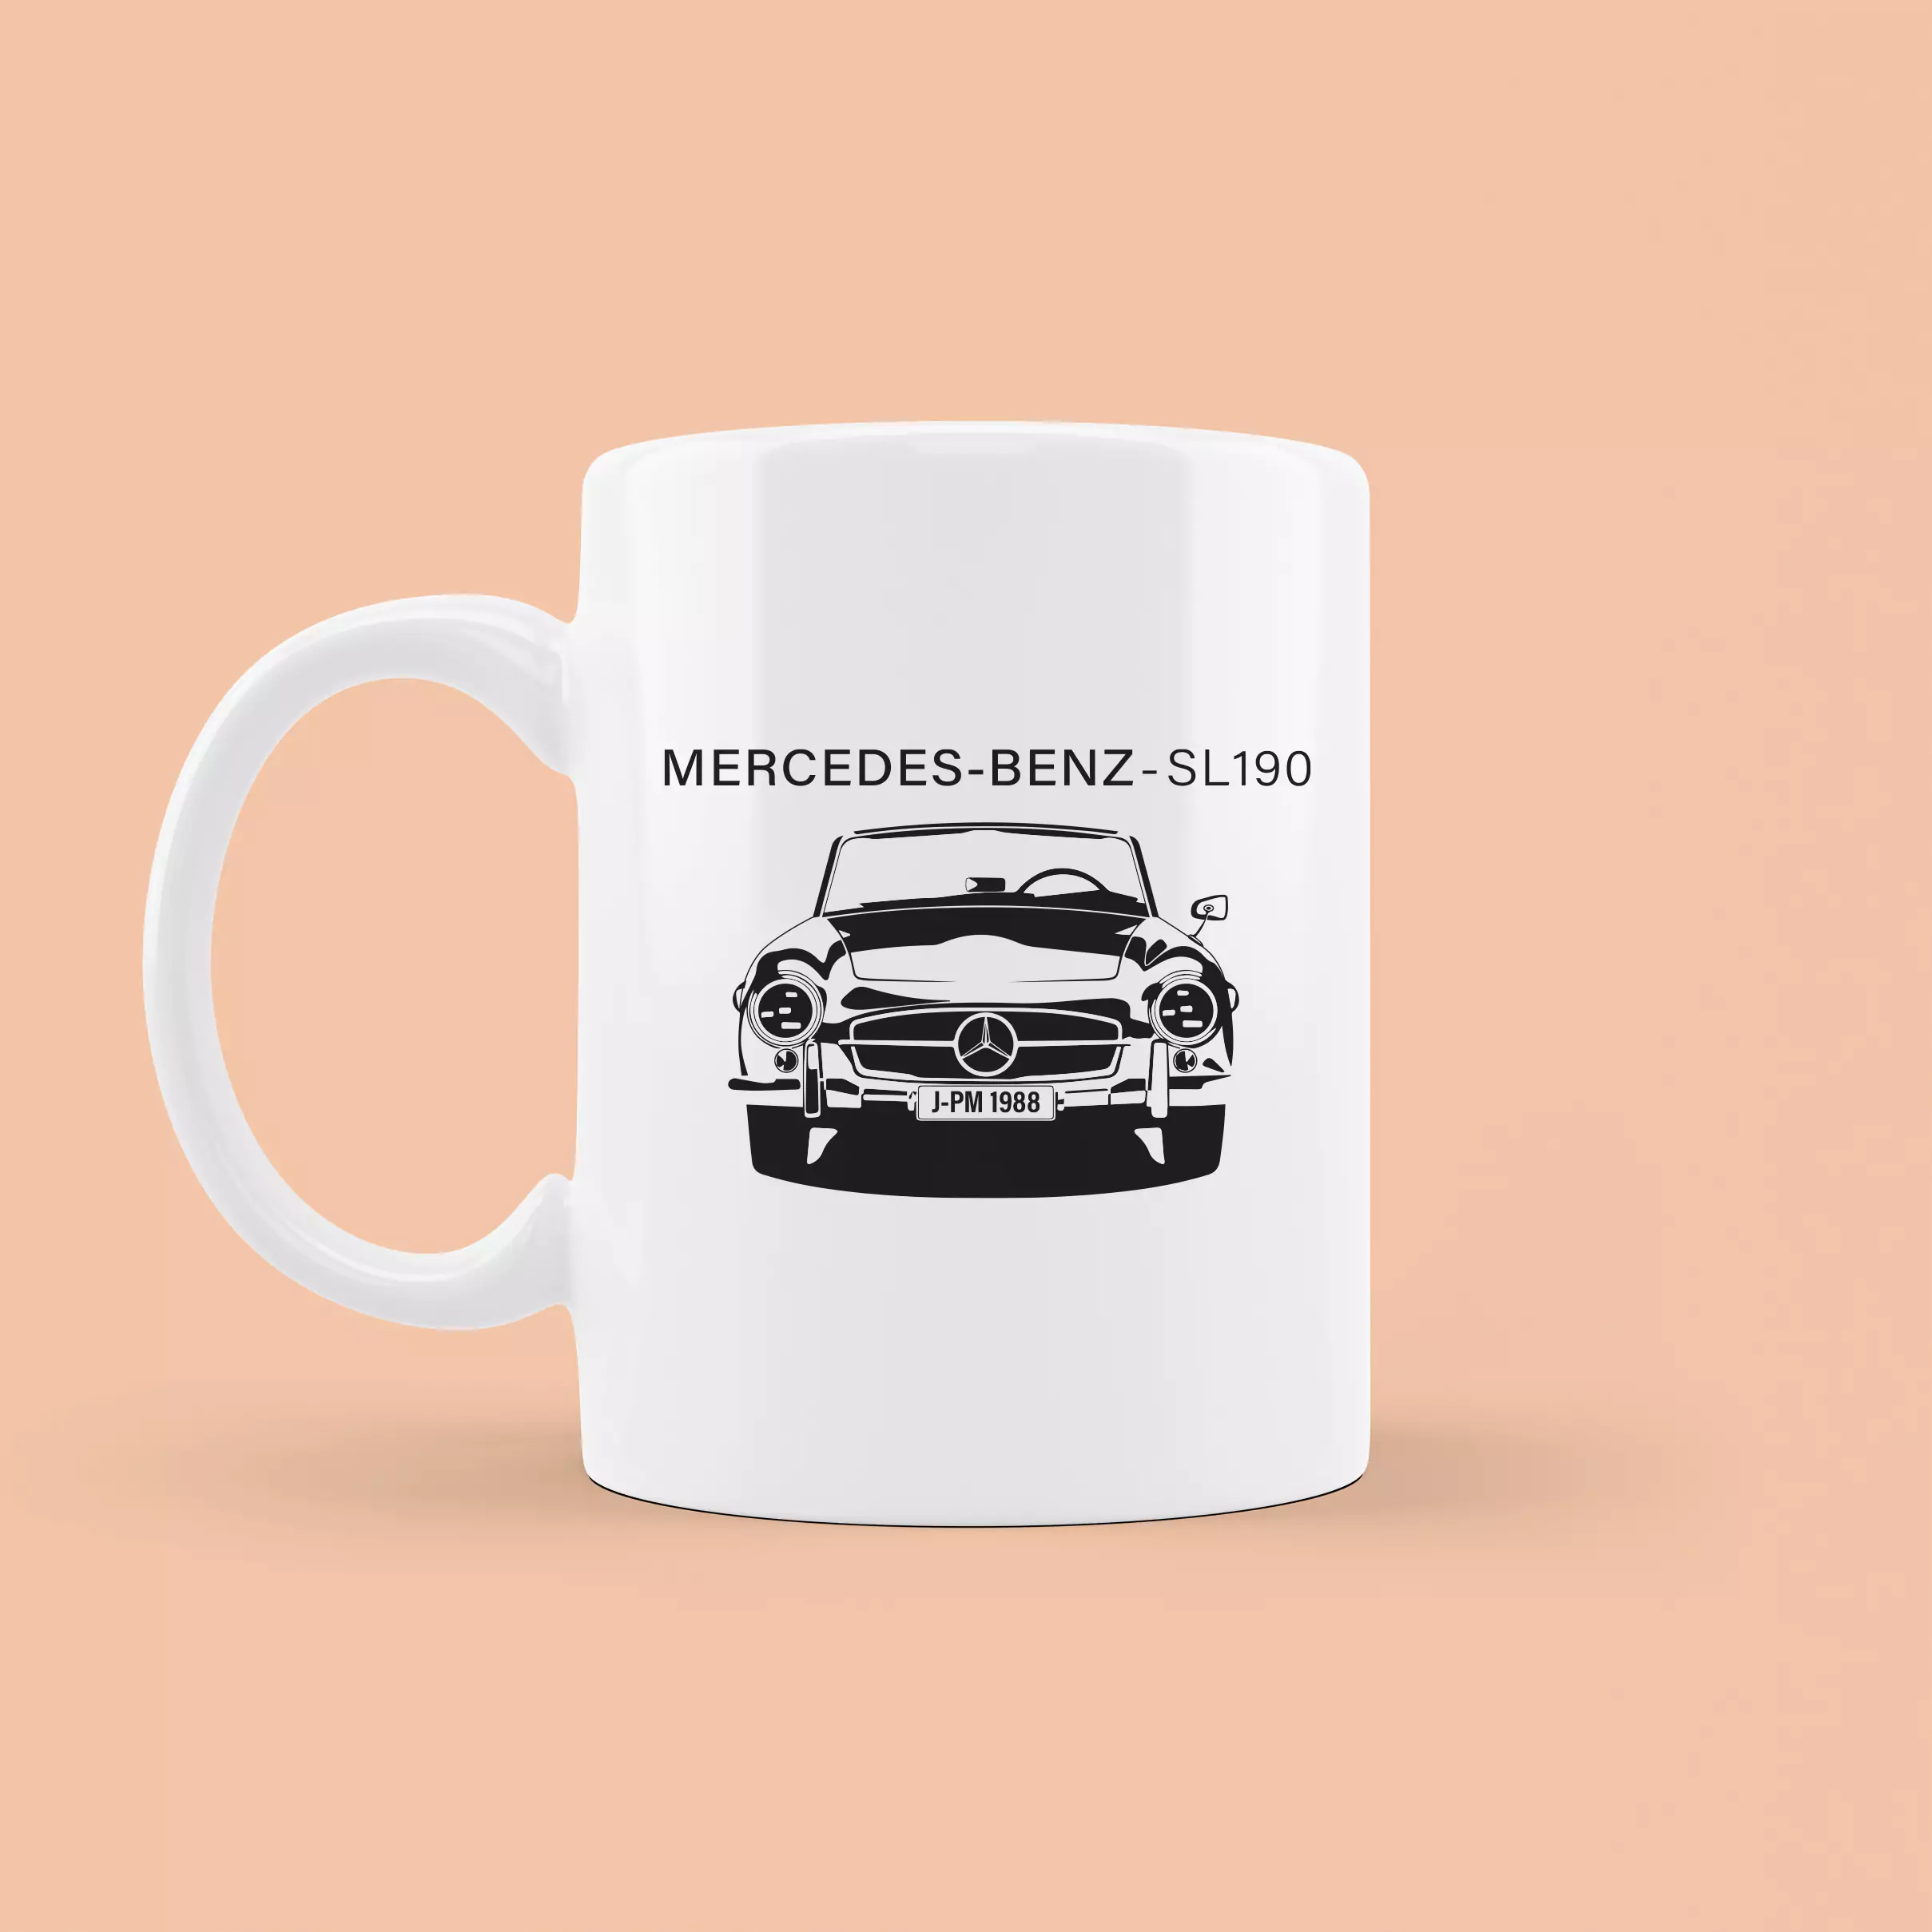 Mercedes Benz Coffee Mugs